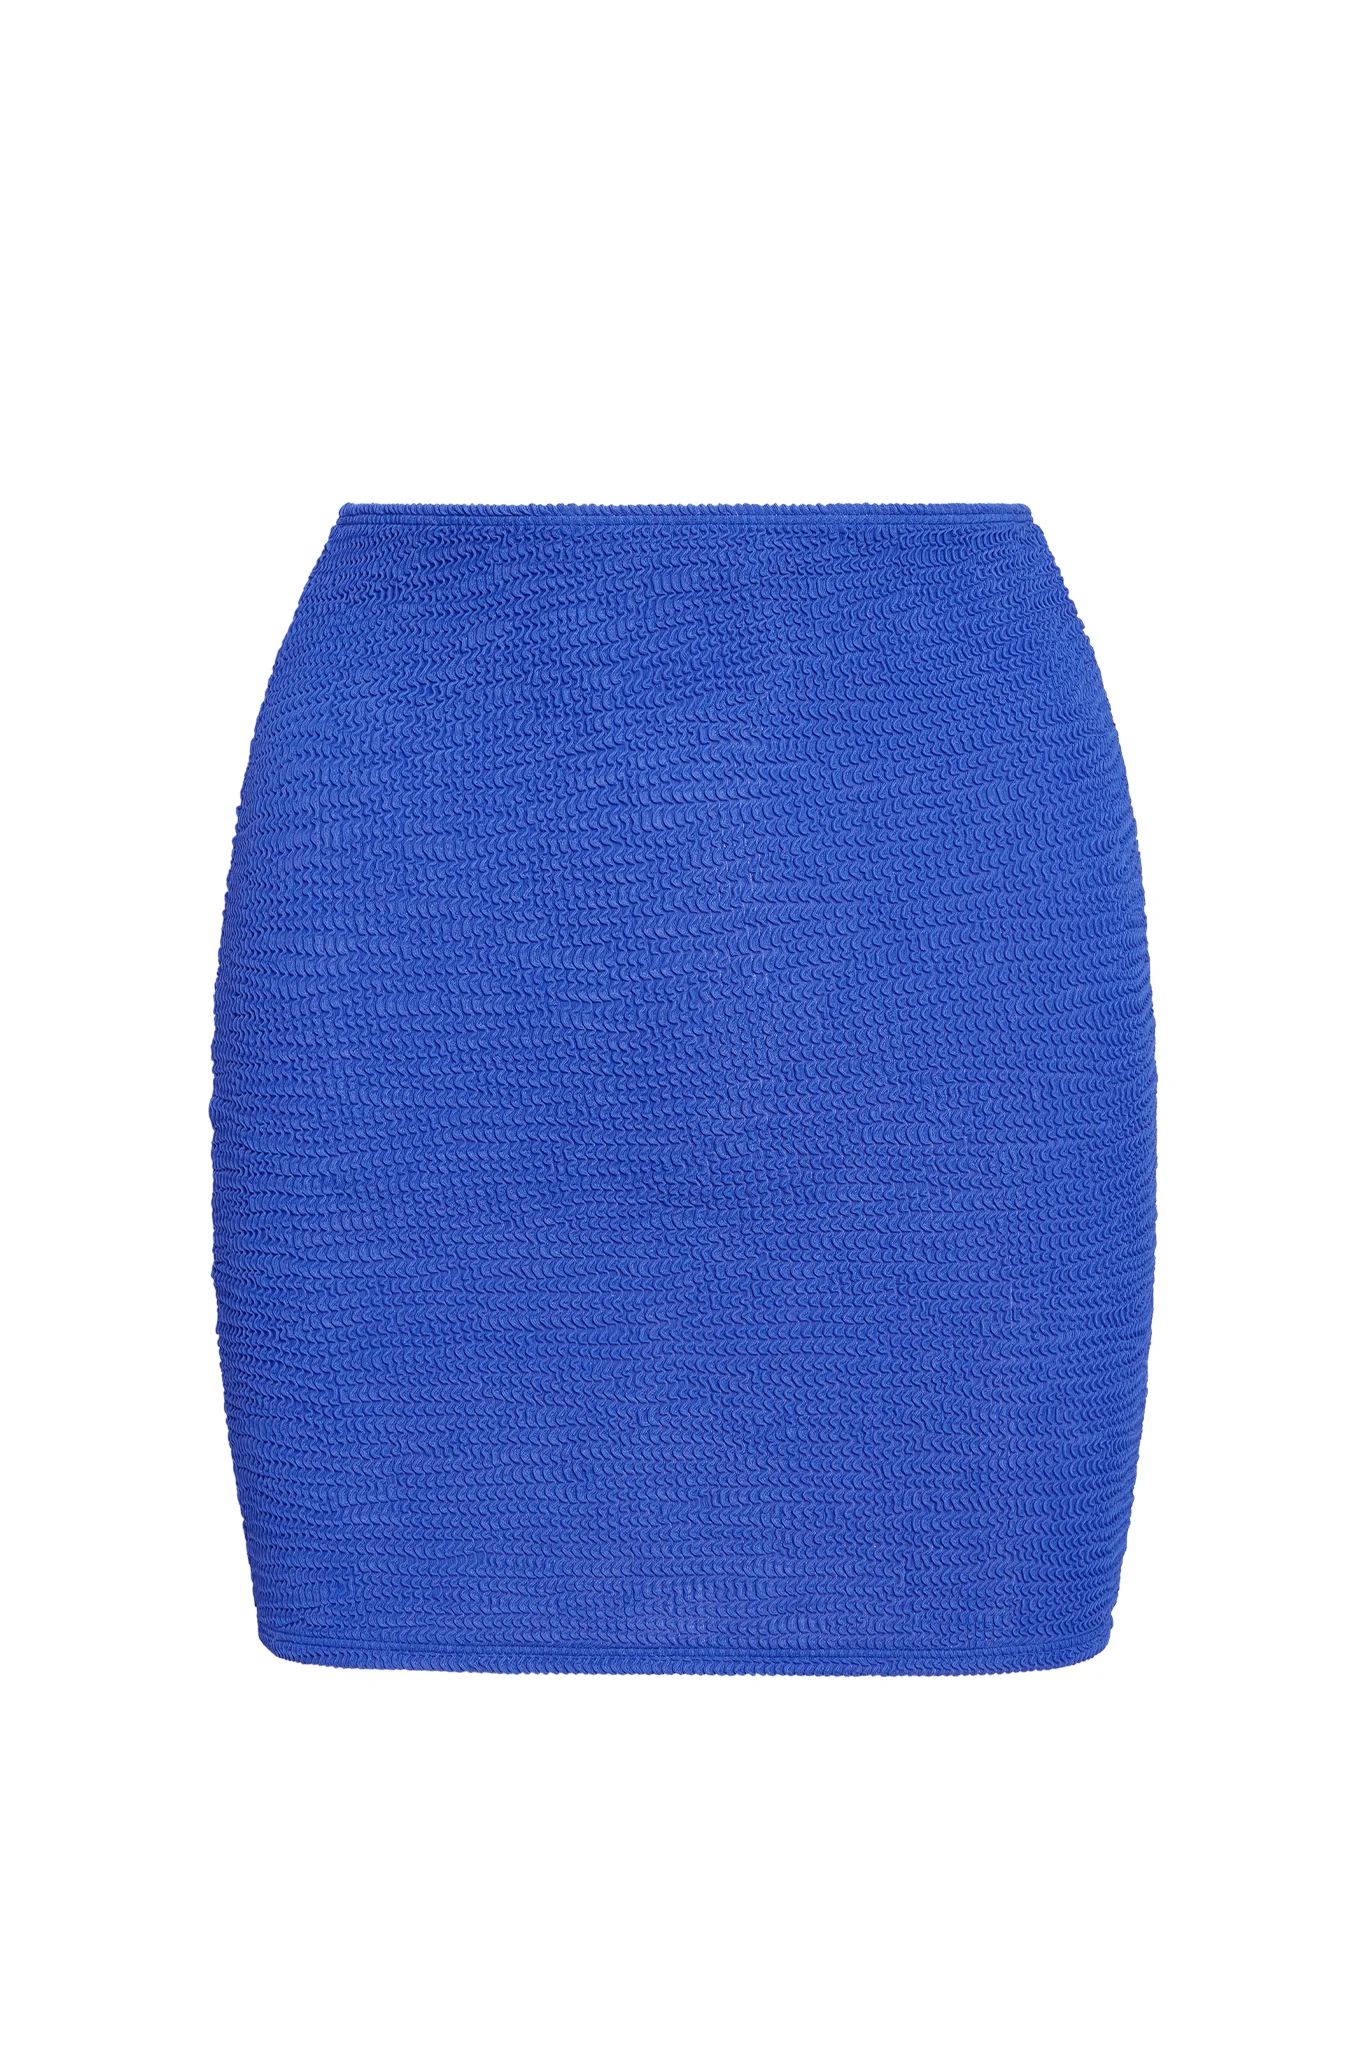 Cayman Skirt - Cobalt Crinkle | Monday Swimwear